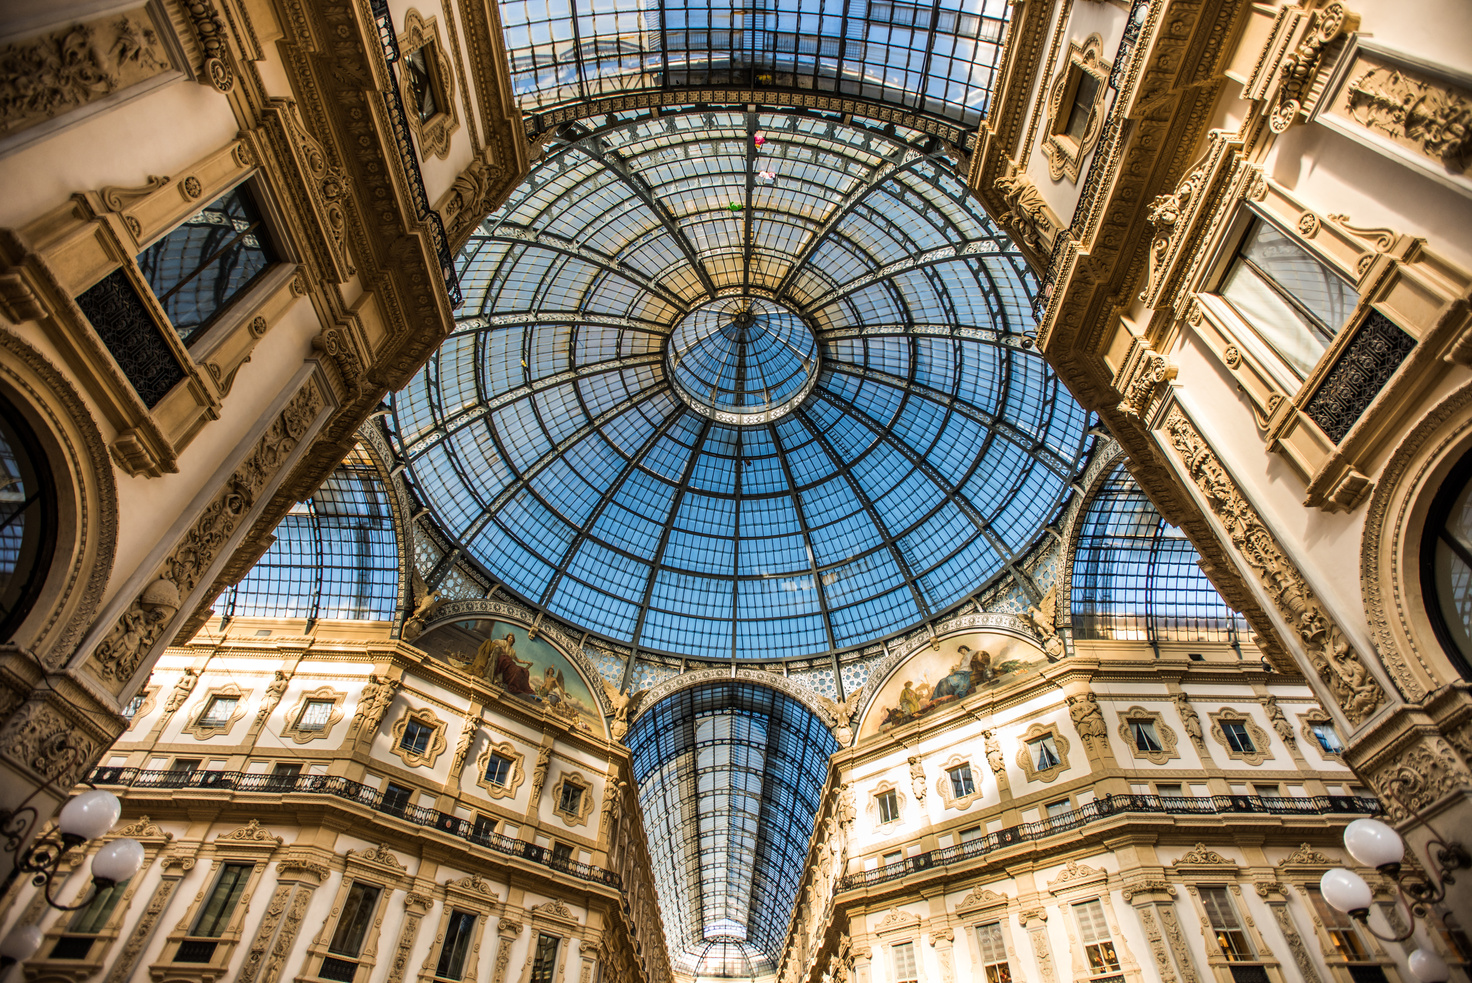 Milan, Italy 2016 - Newly refurbished Galleria Vittorio Emanuele II